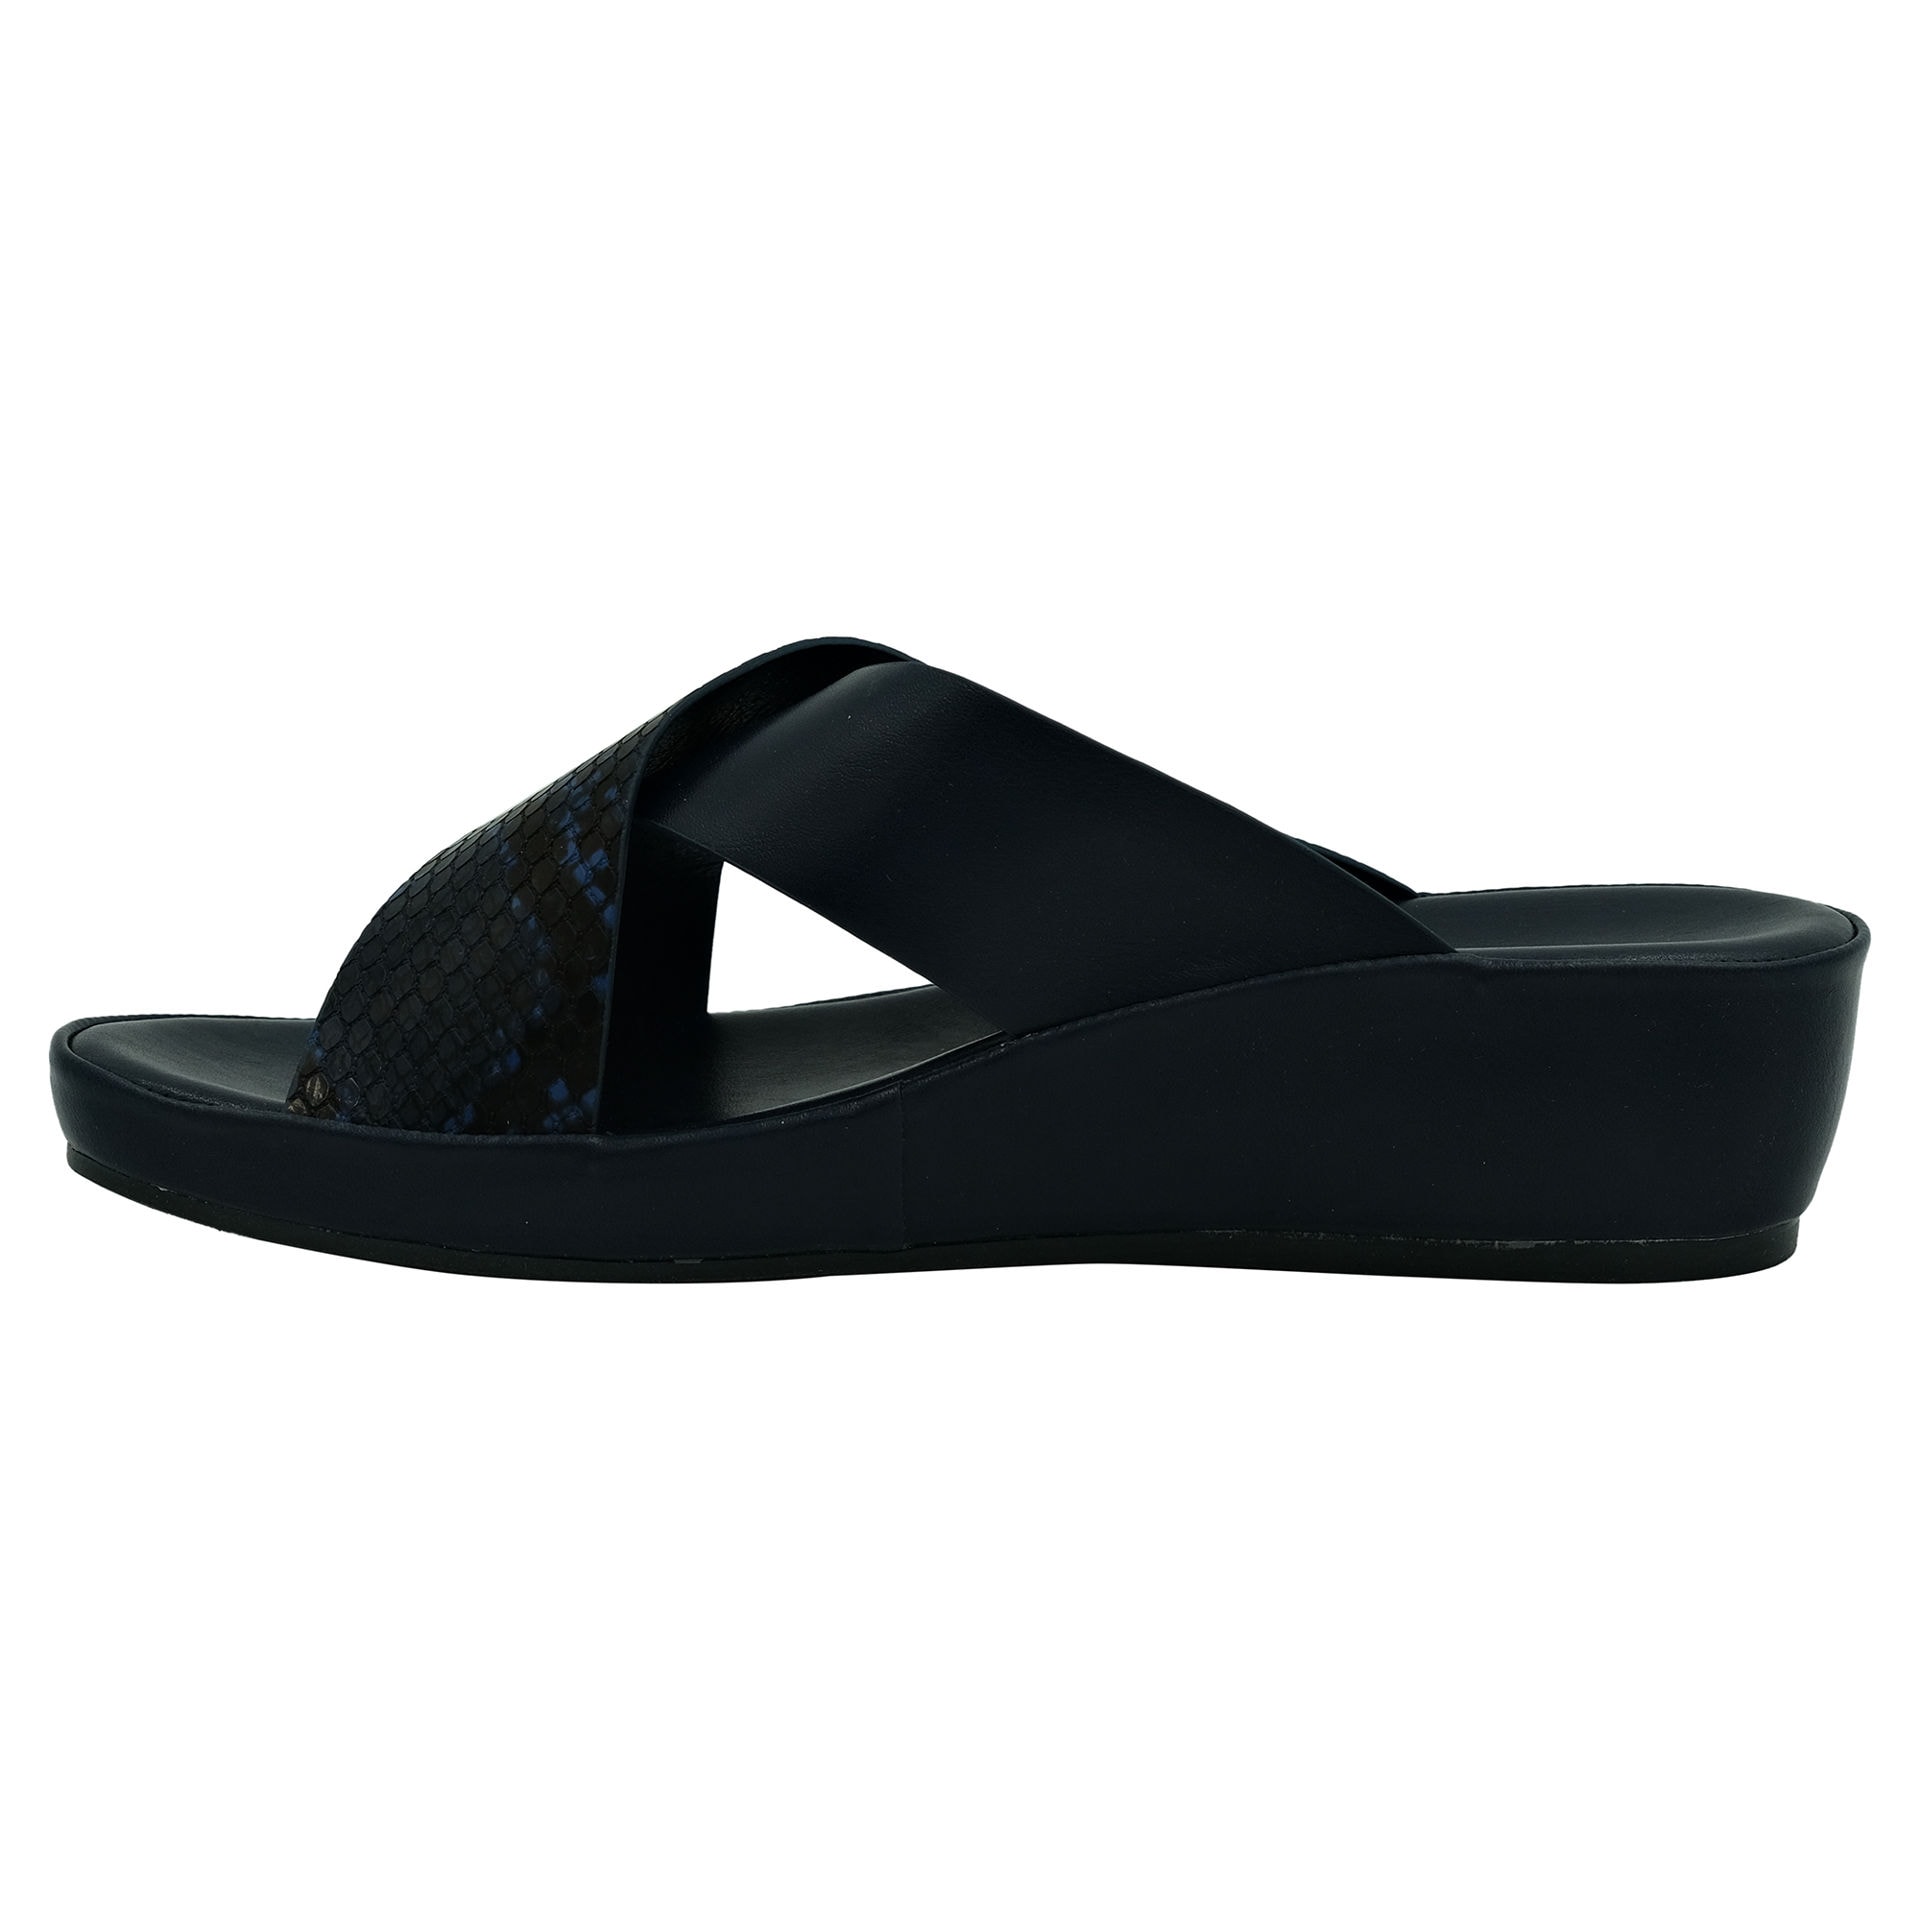 Shop Andarina Women's Wedge Sandals with Reptile Design | Dragon Mart UAE